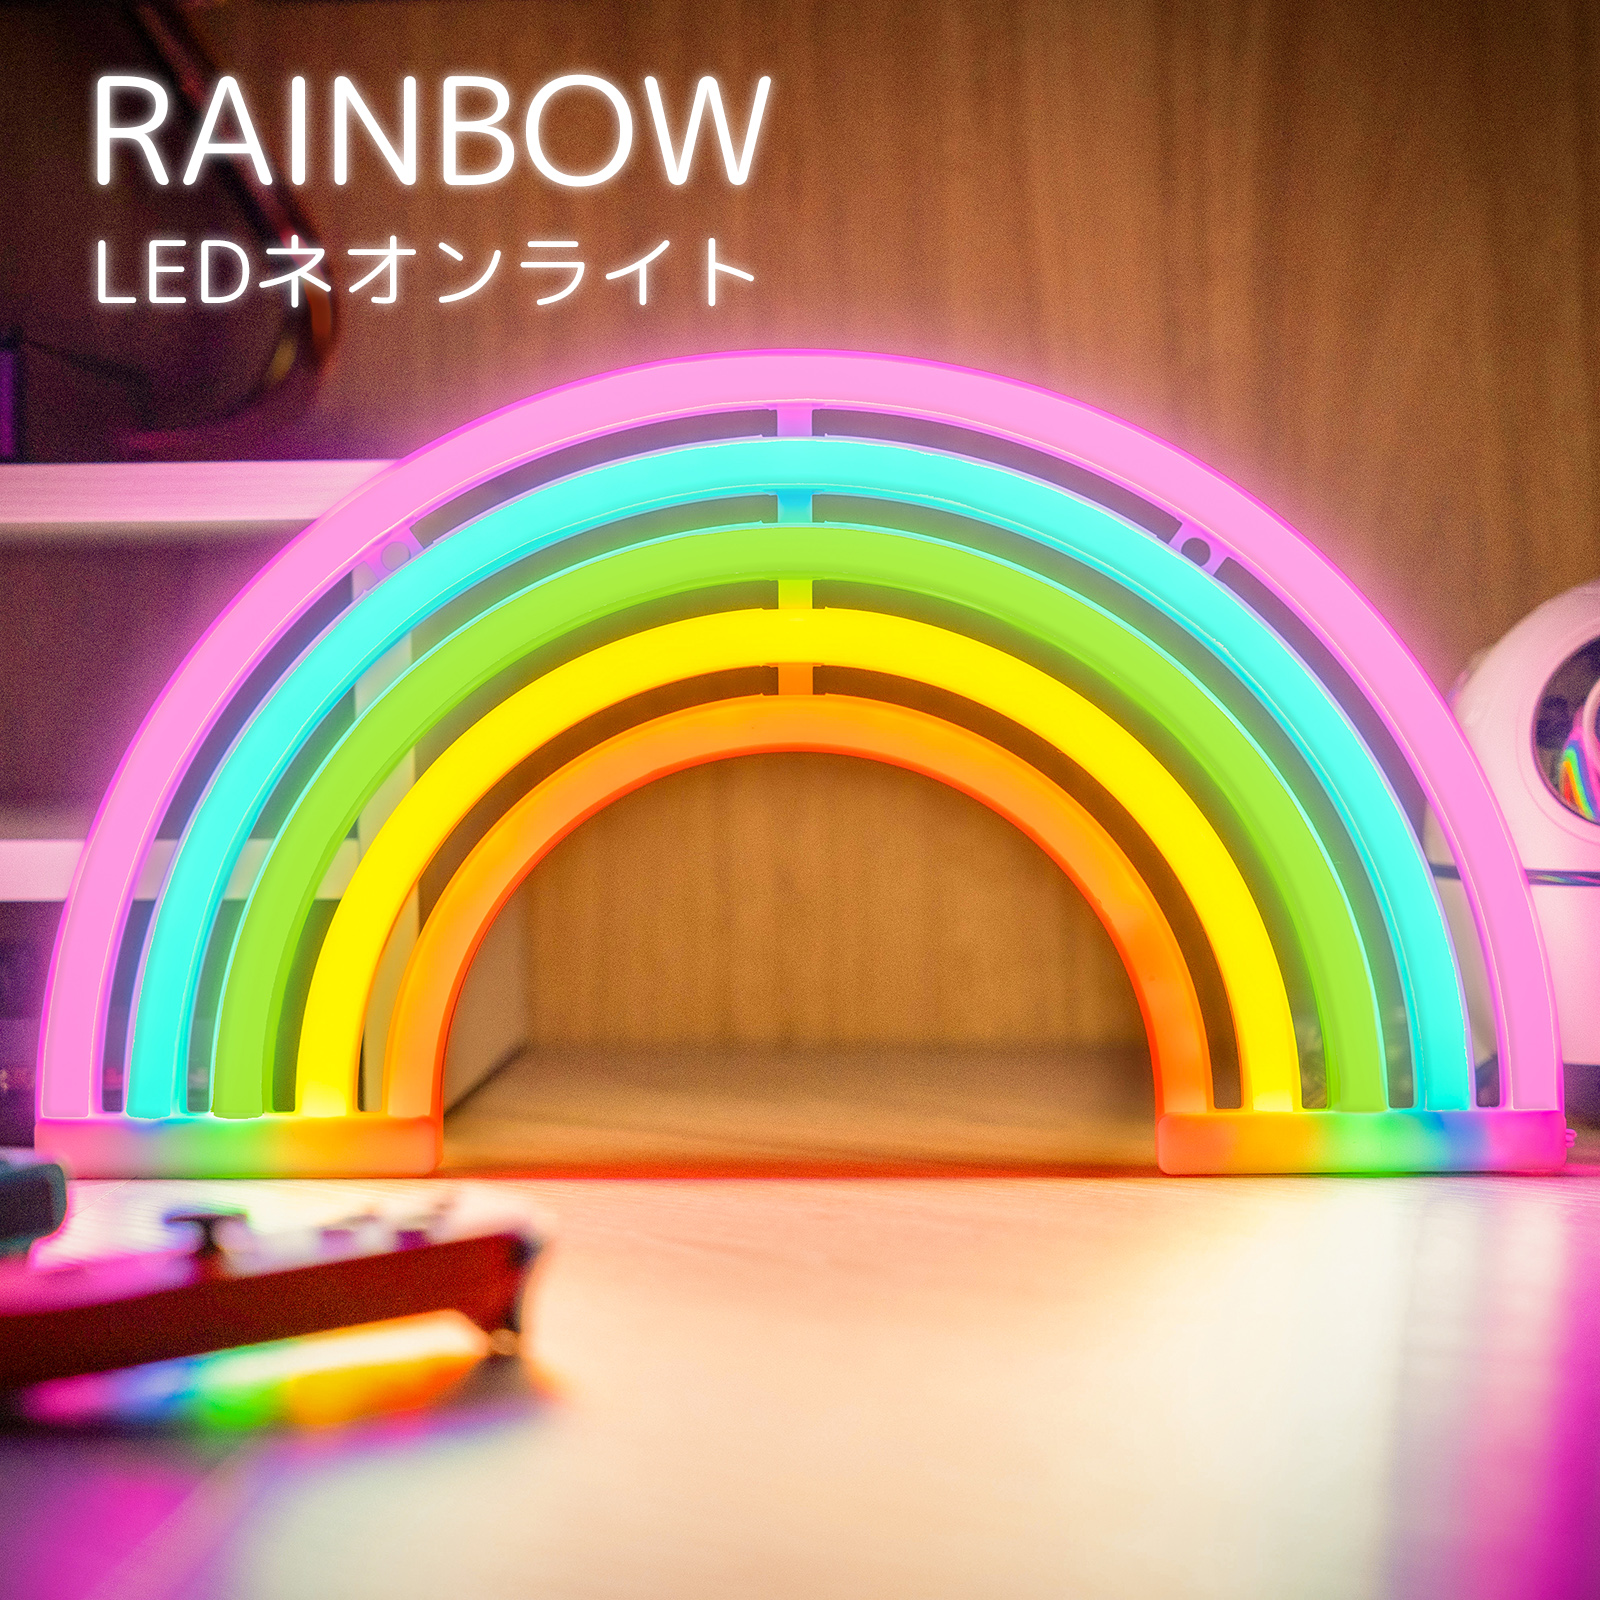 RAINBOW LED 虹 レインボー ネオン ライト ネオンサイン ネオン管 